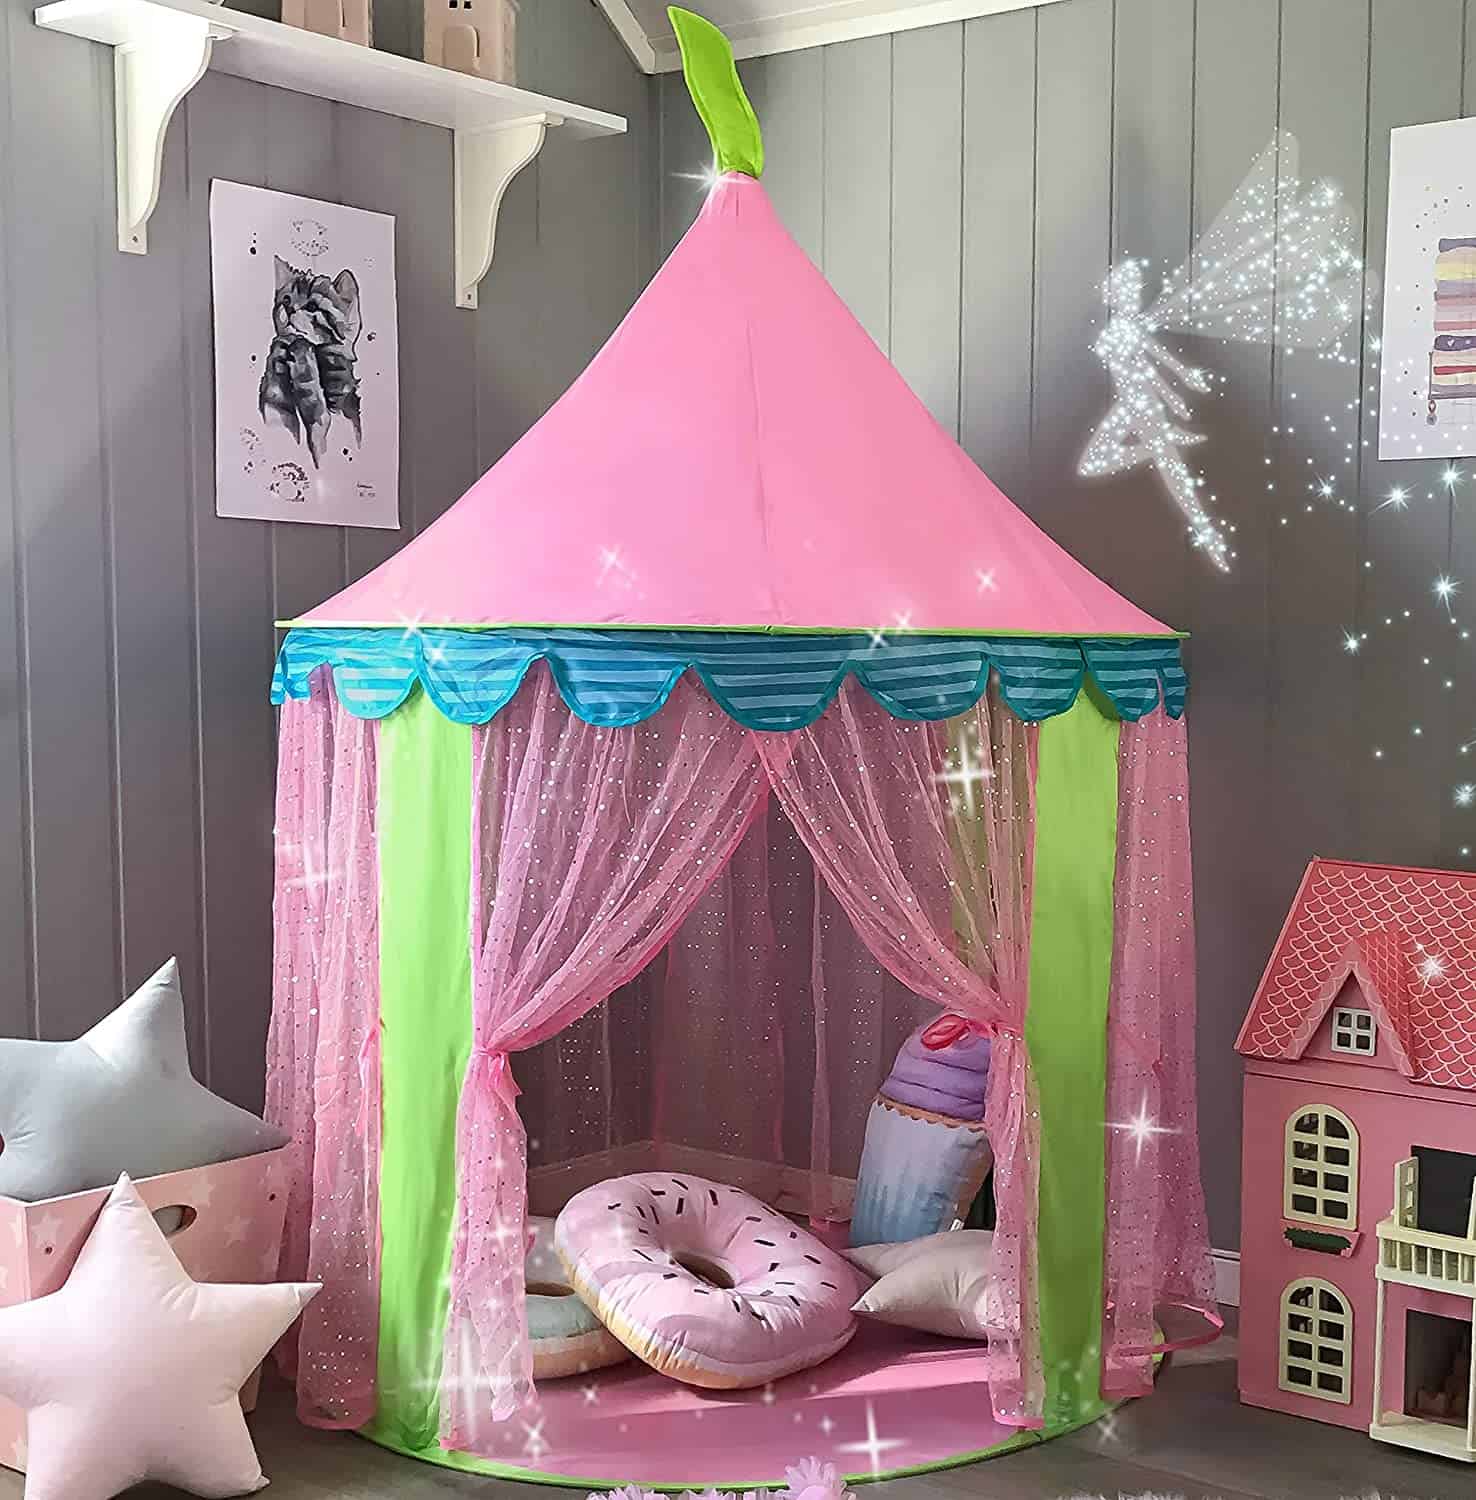 Best princesses play tent: Tiny Land